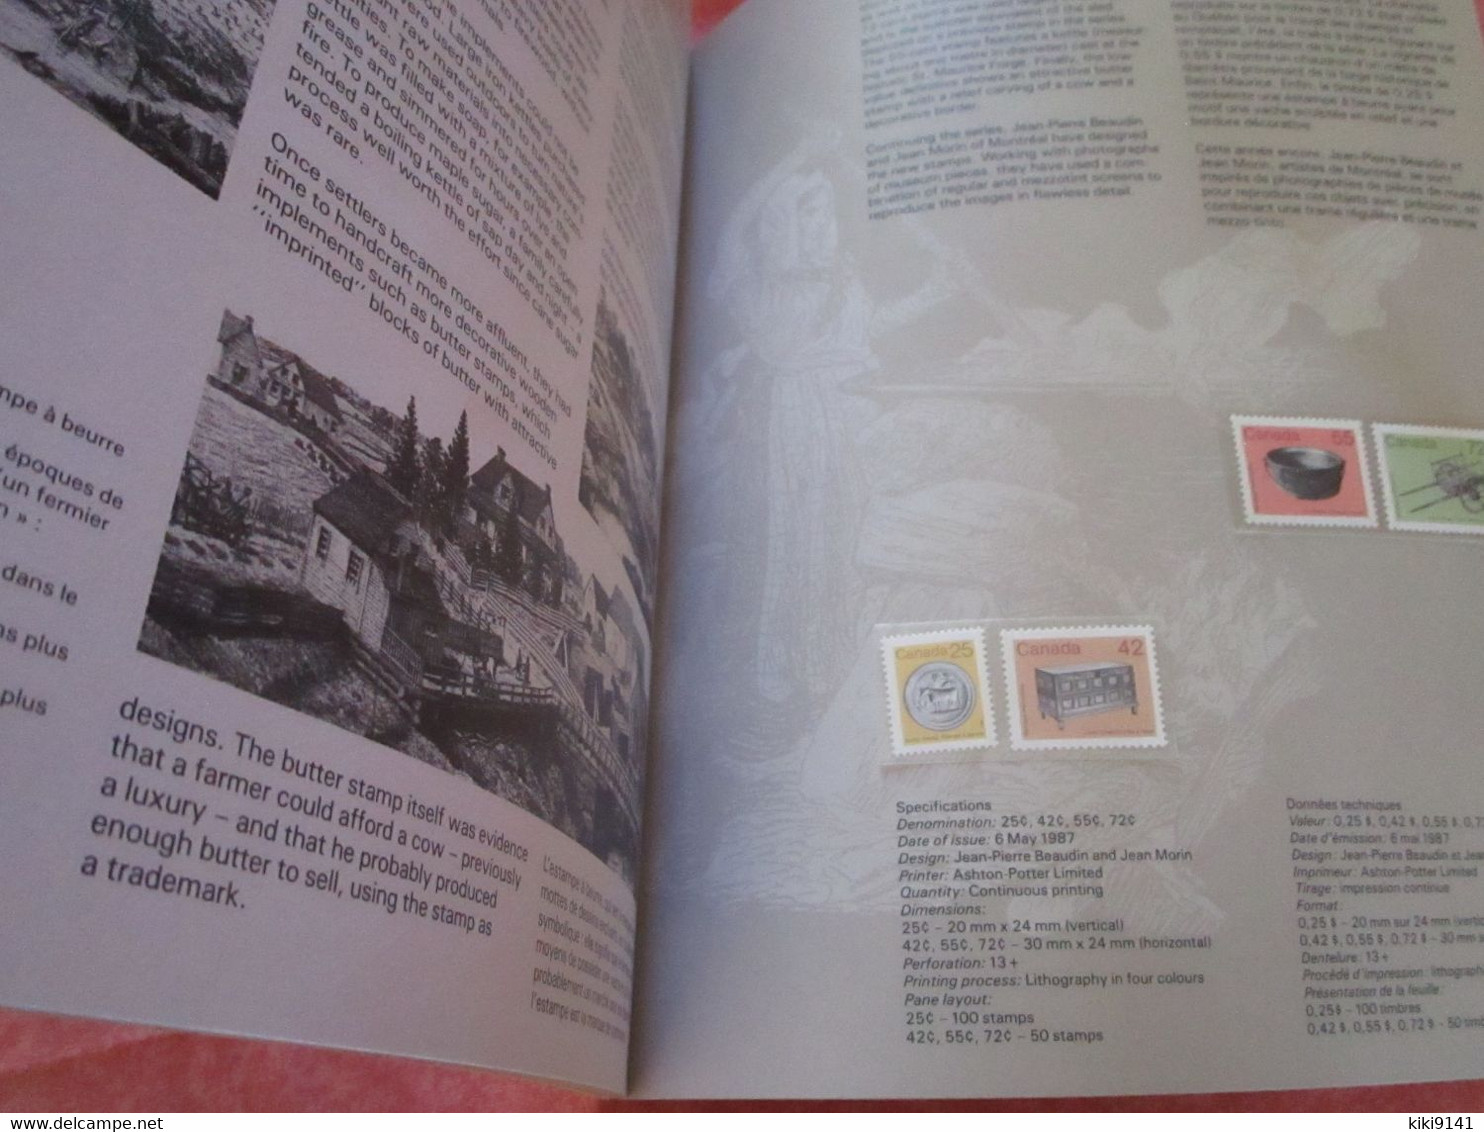 1987 - Souvenir Collection of the Postage Stamps - Collection-souvenir des Timbres-poste (46 pages)